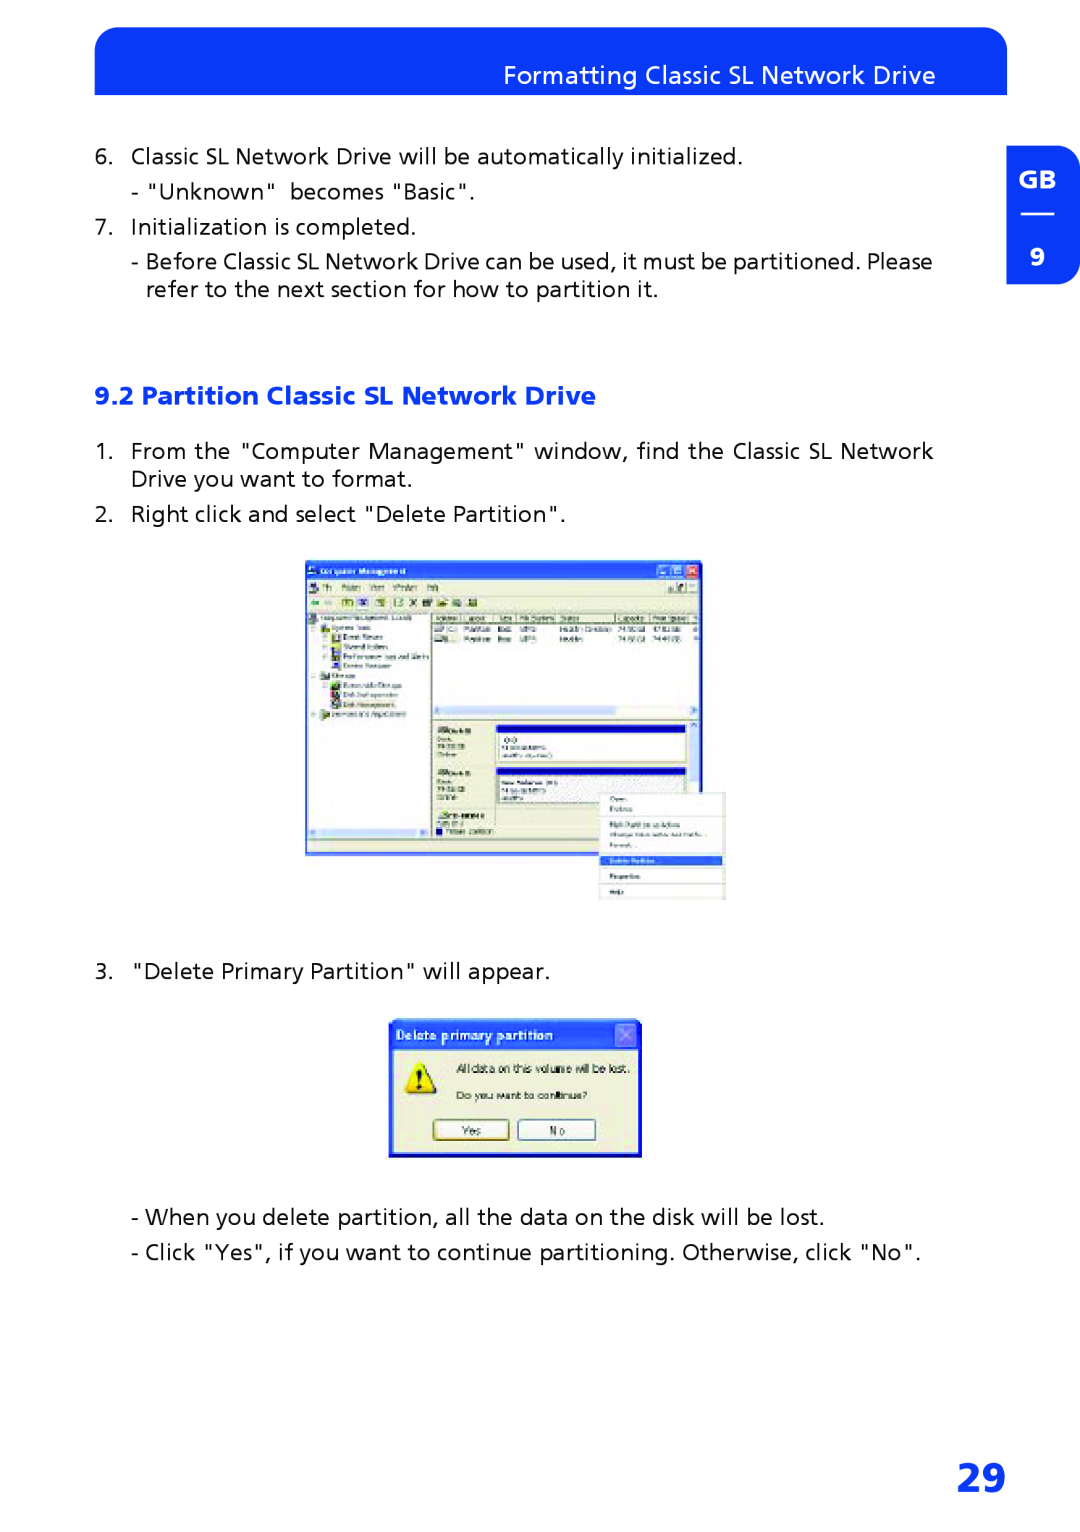 Freecom Technologies Network hard drive manual Formatting Classic SL Network Drive, Partition Classic SL Network Drive 